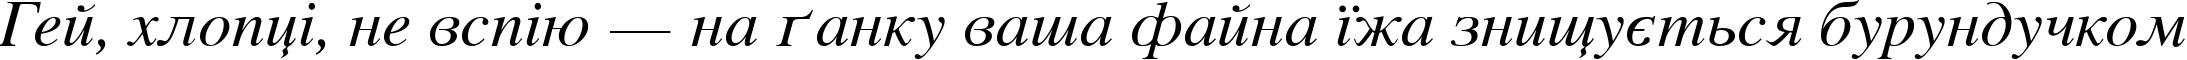 Пример написания шрифтом Vremya Italic текста на украинском